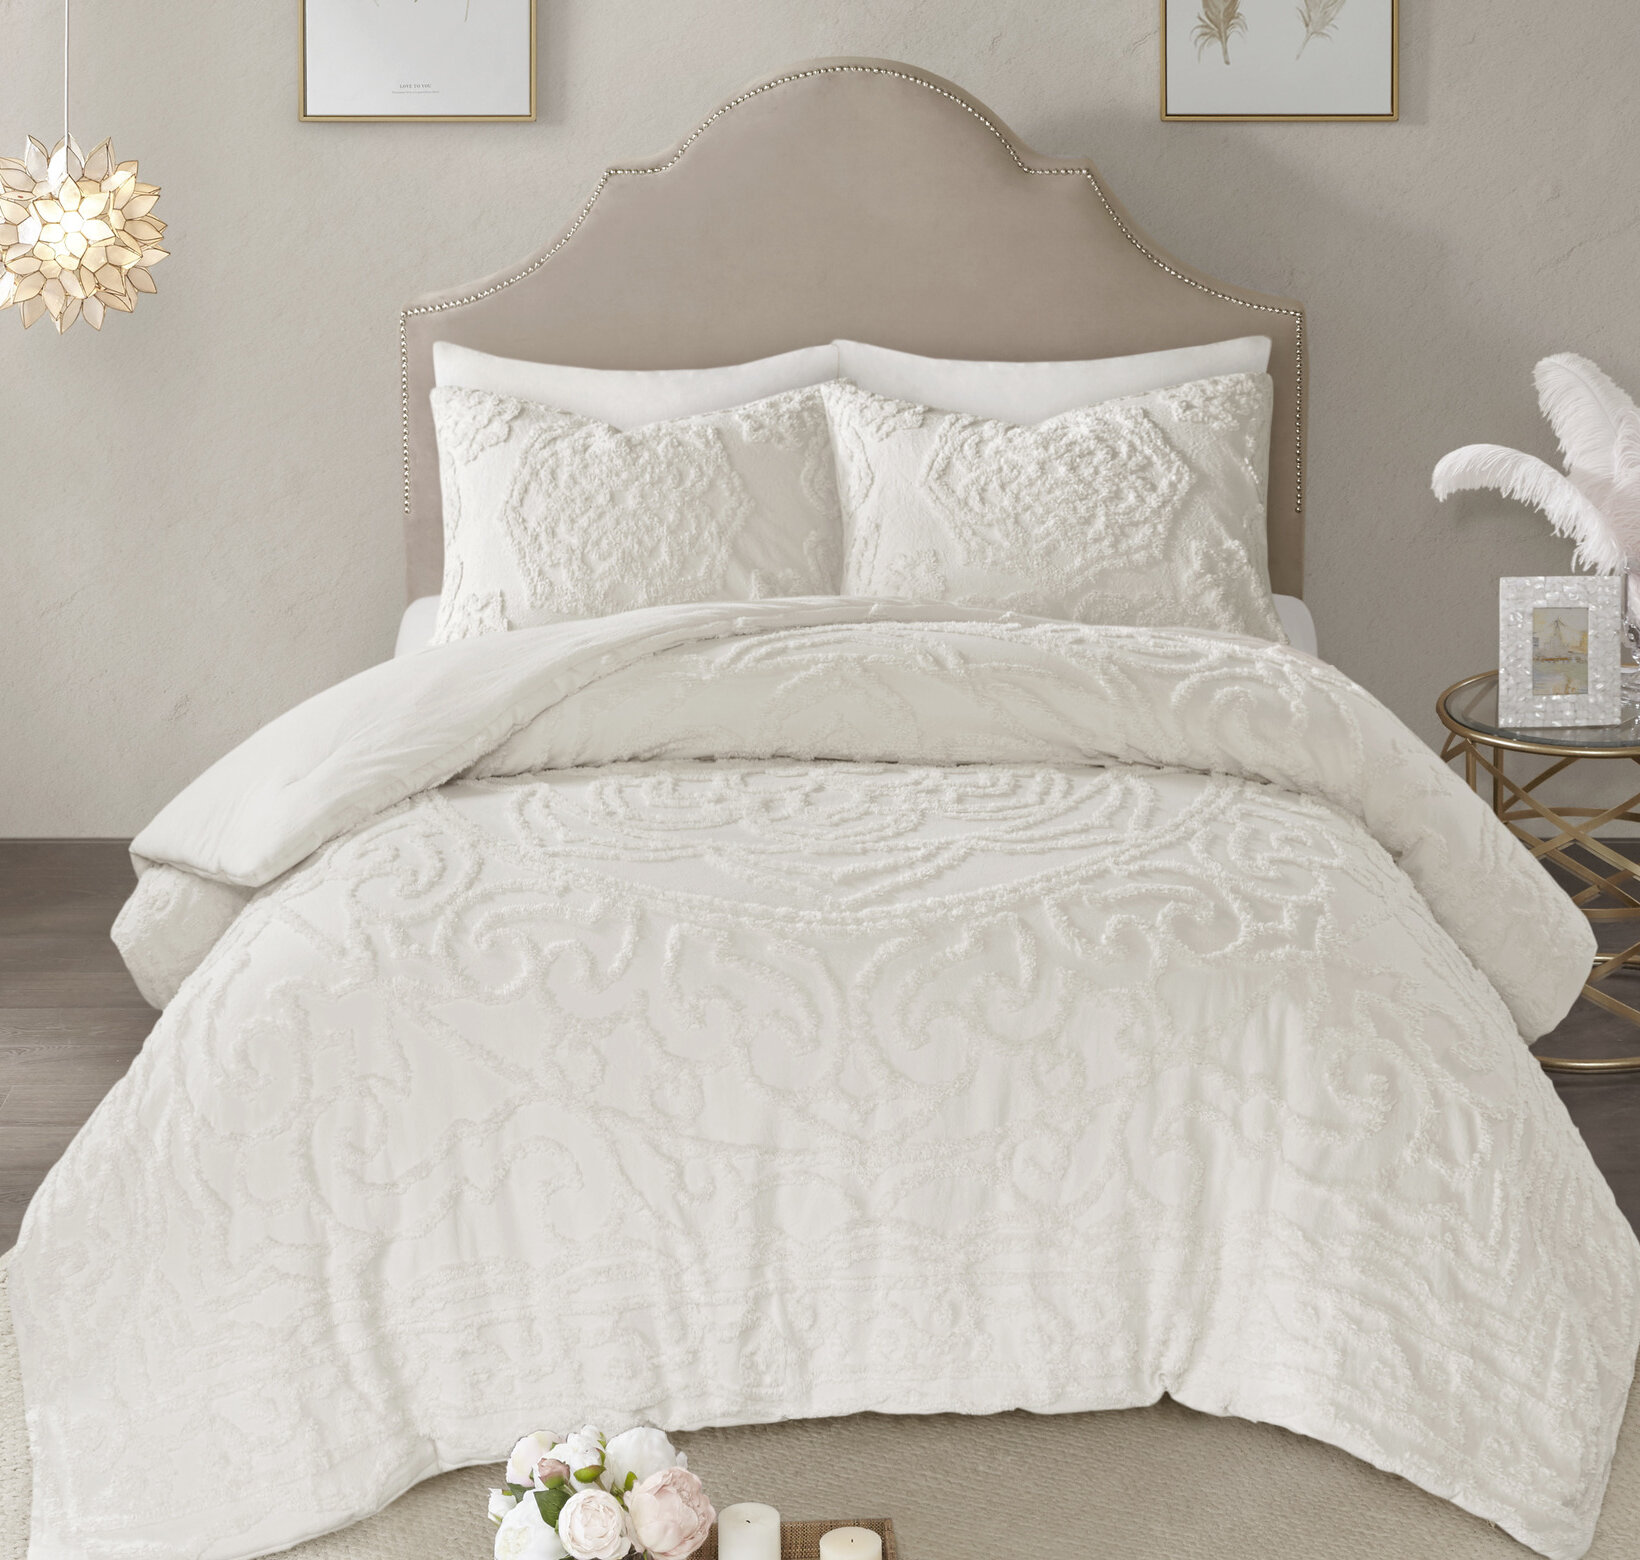 Ophelia Co Delatorre Comforter Set Reviews Wayfair